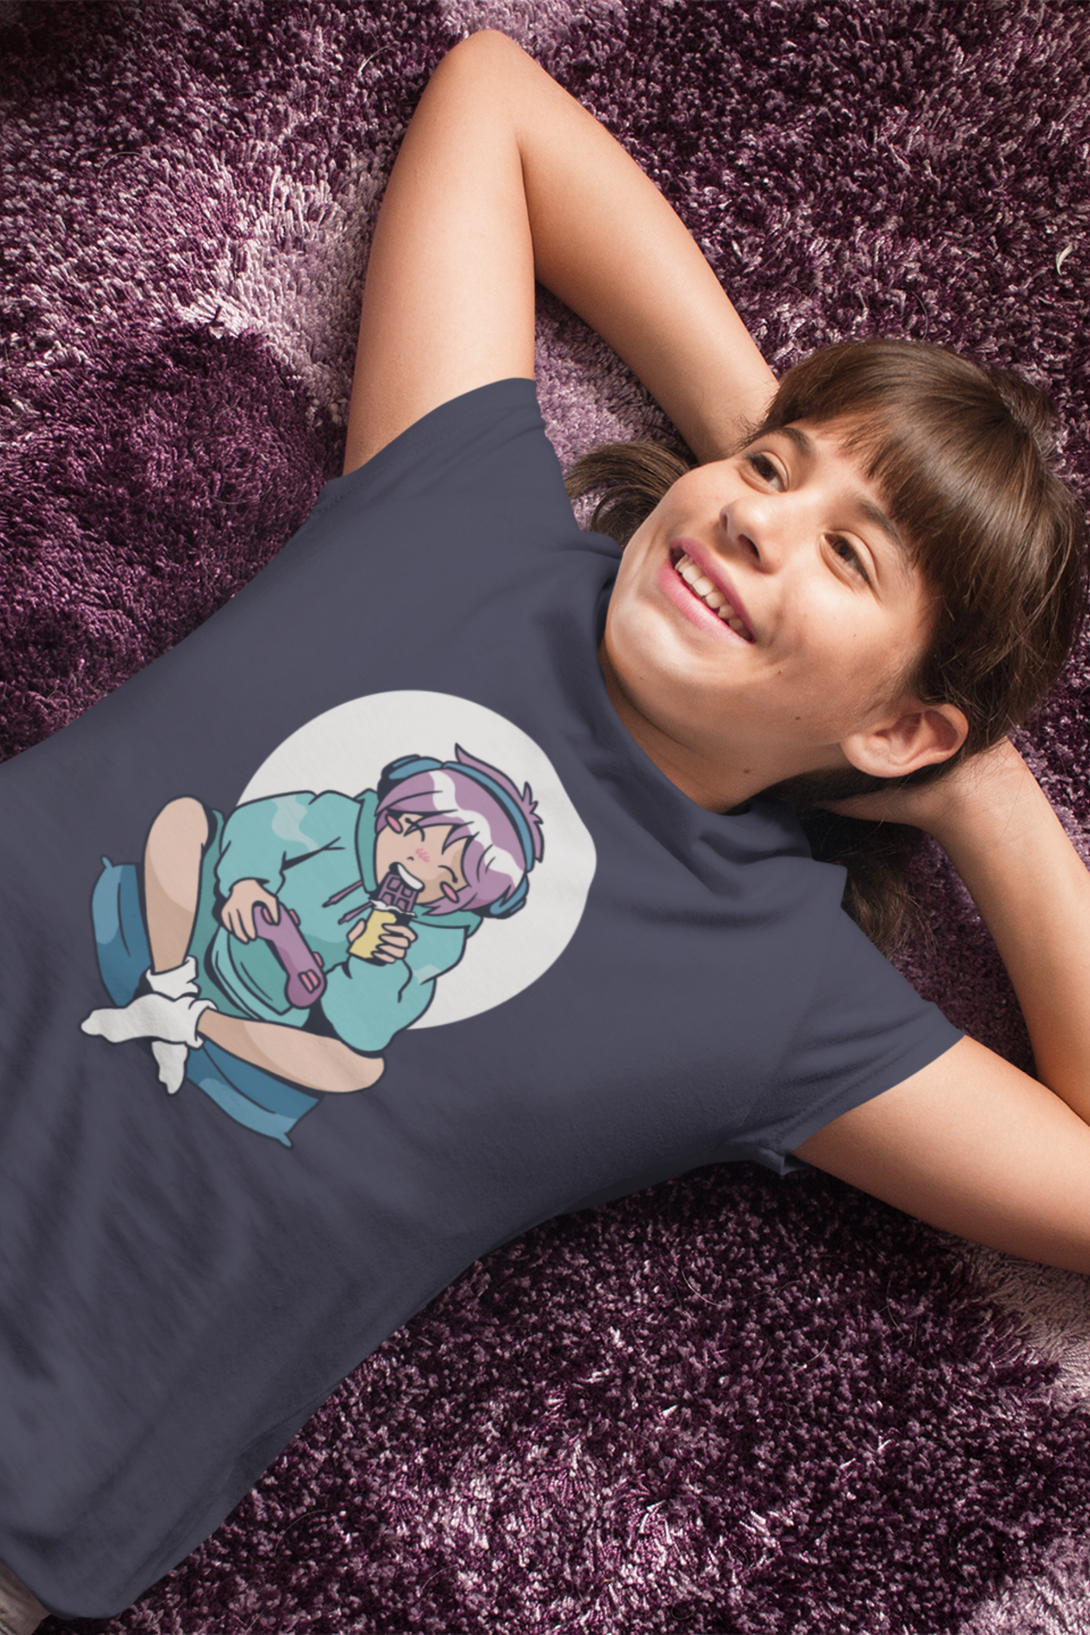 Gamer Anime Printed T-Shirt For Girl - WowWaves - 5